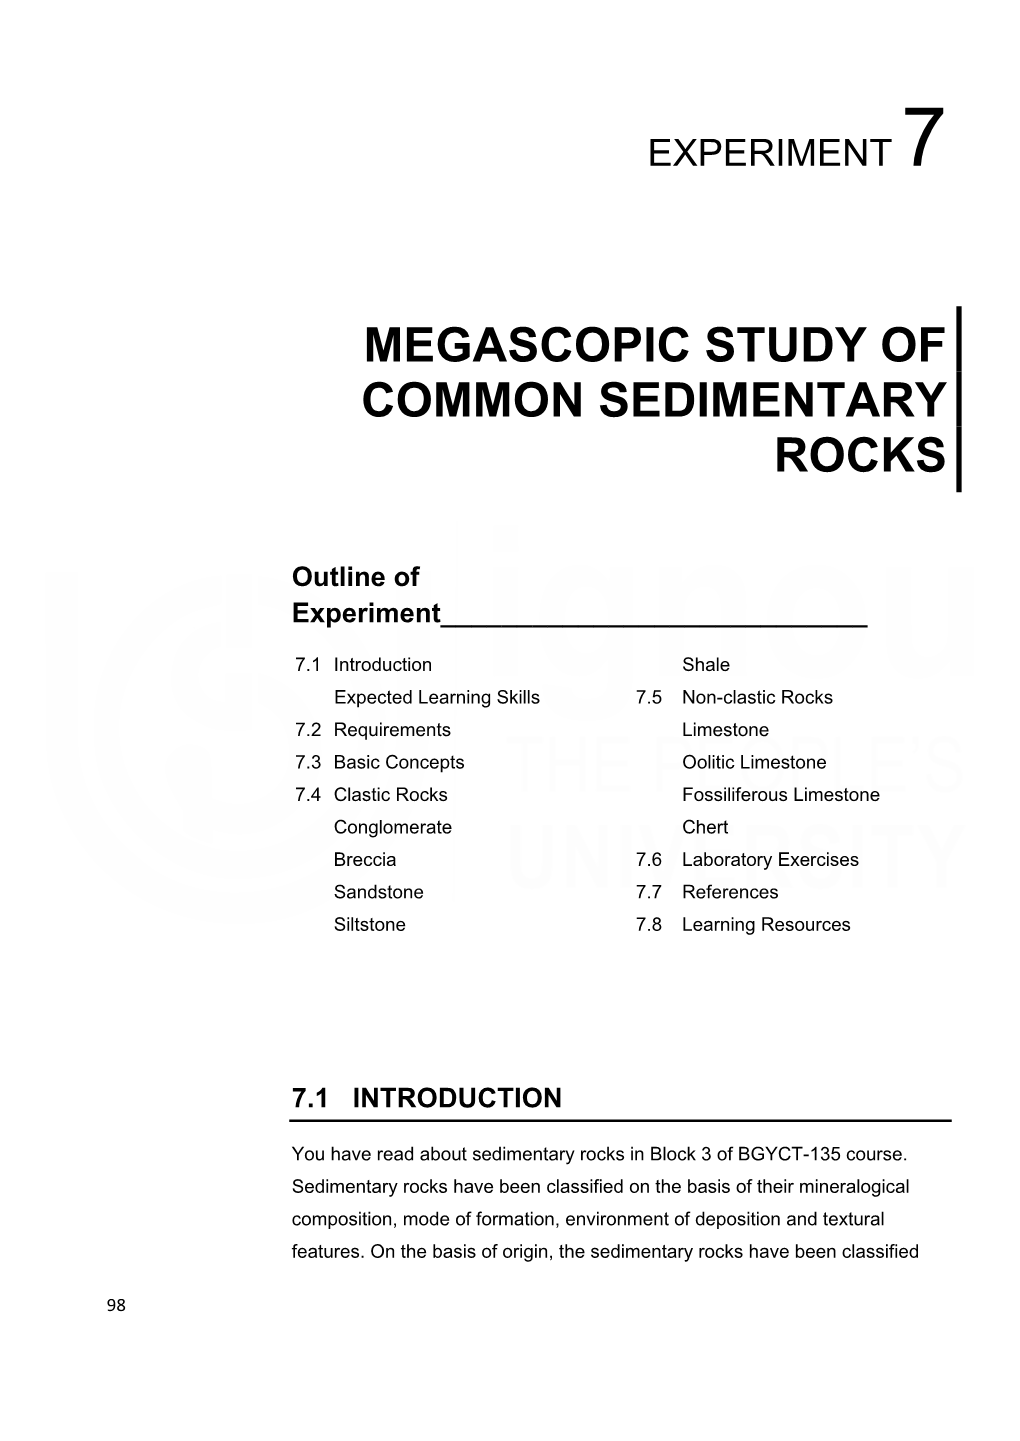 Megascopic Study of Common Sedimentary Rocks